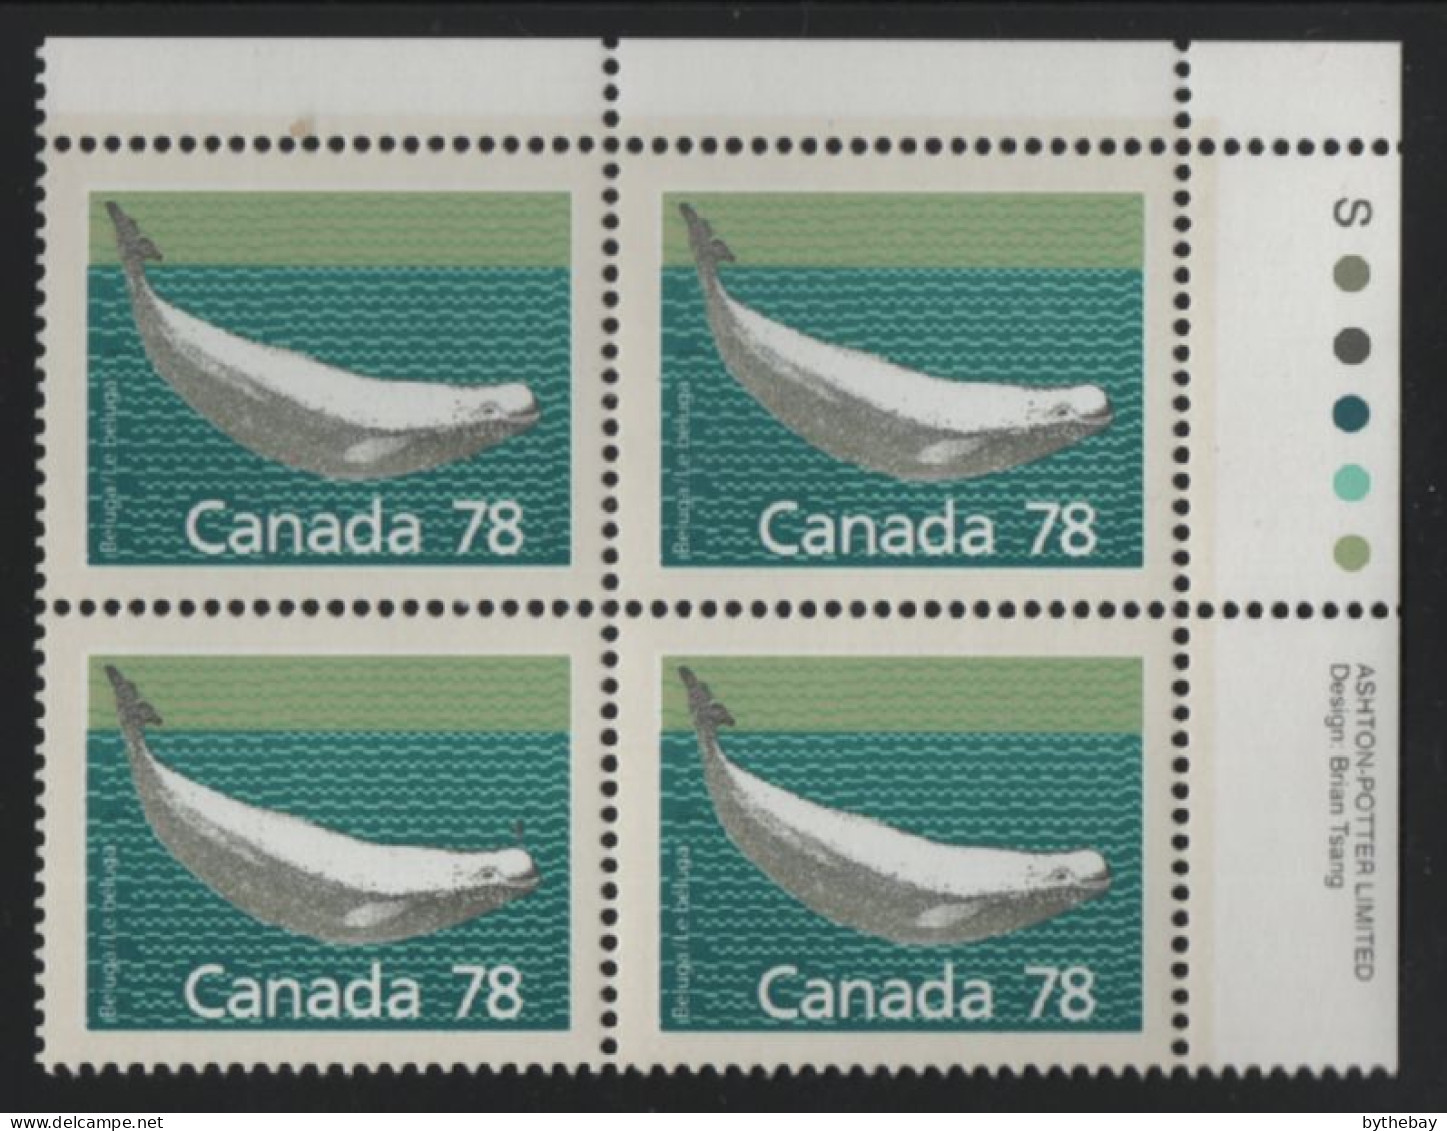 Canada 1988-92 MNH Sc 1179 78c Beluga Whale UR Plate Block - Plate Number & Inscriptions